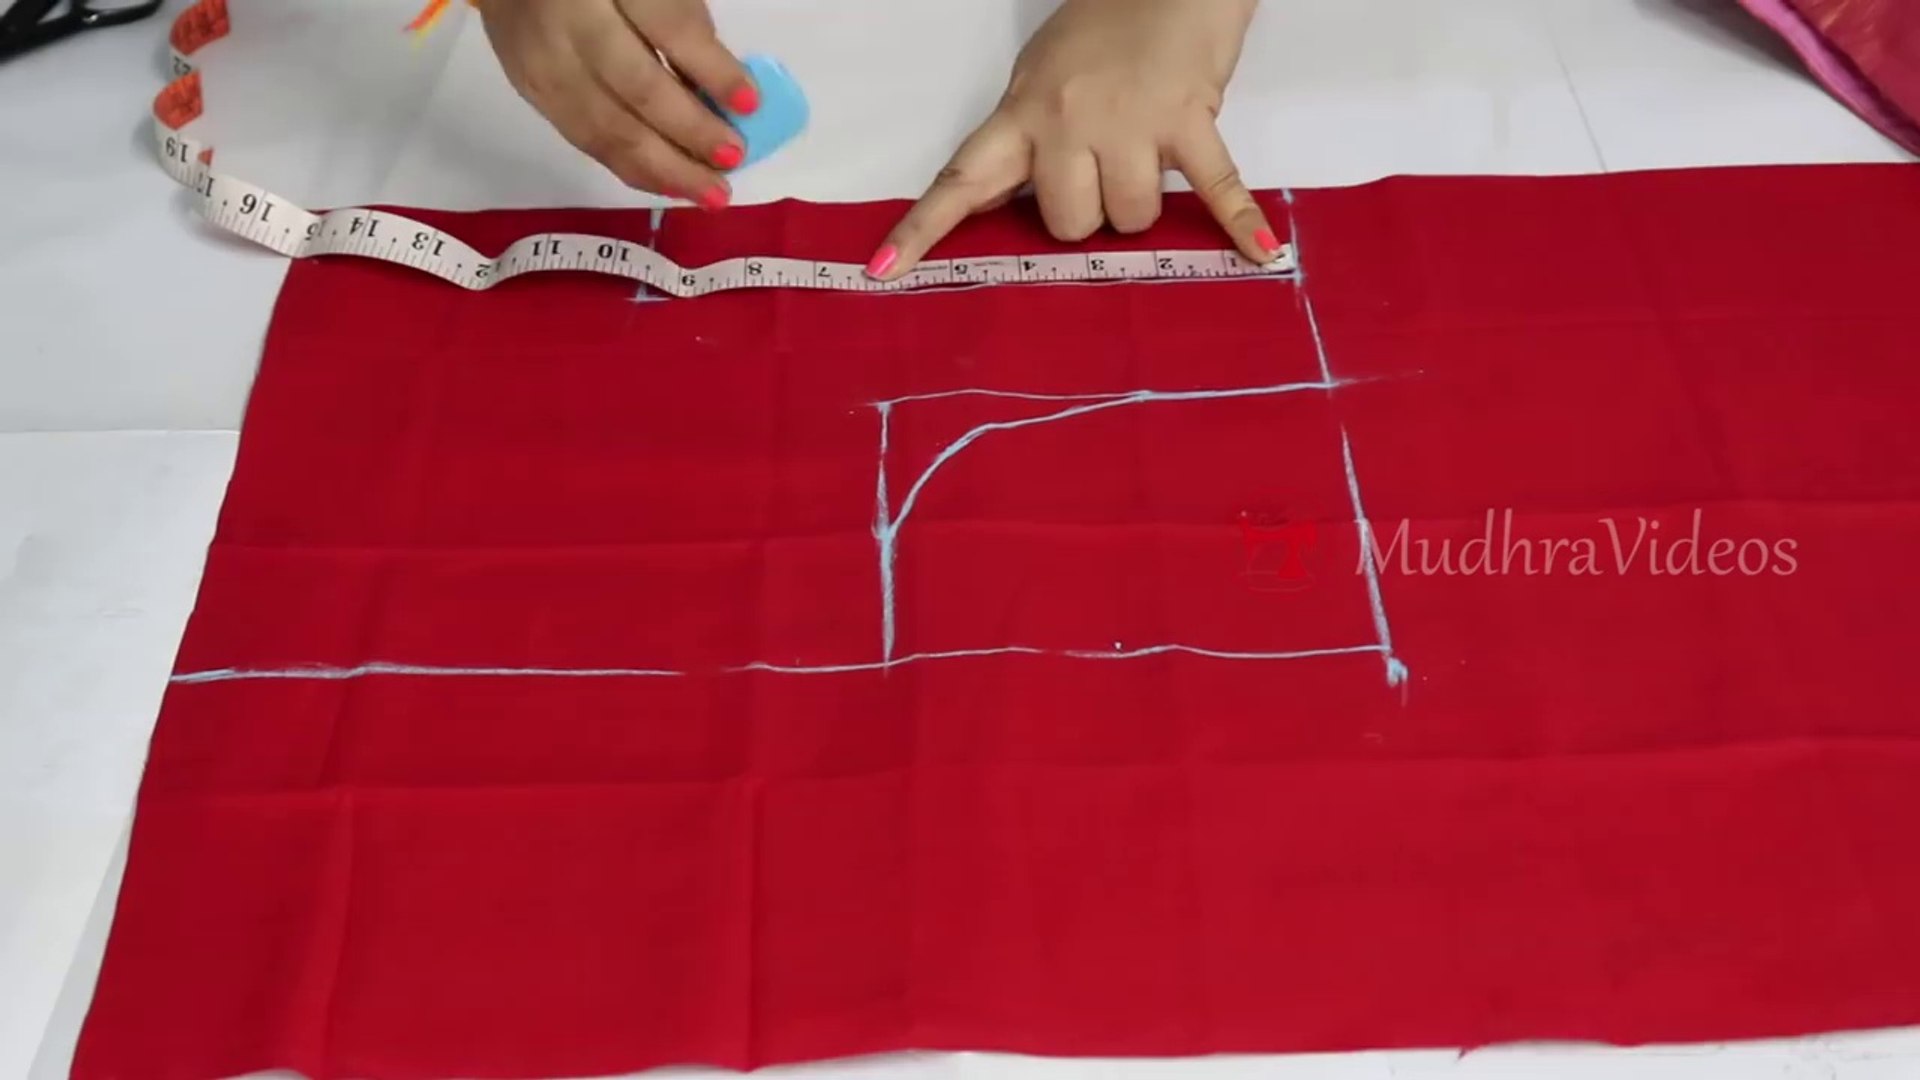 Blouse Cutting Very Clarity -- Mudhra videos Tailoring Beginners